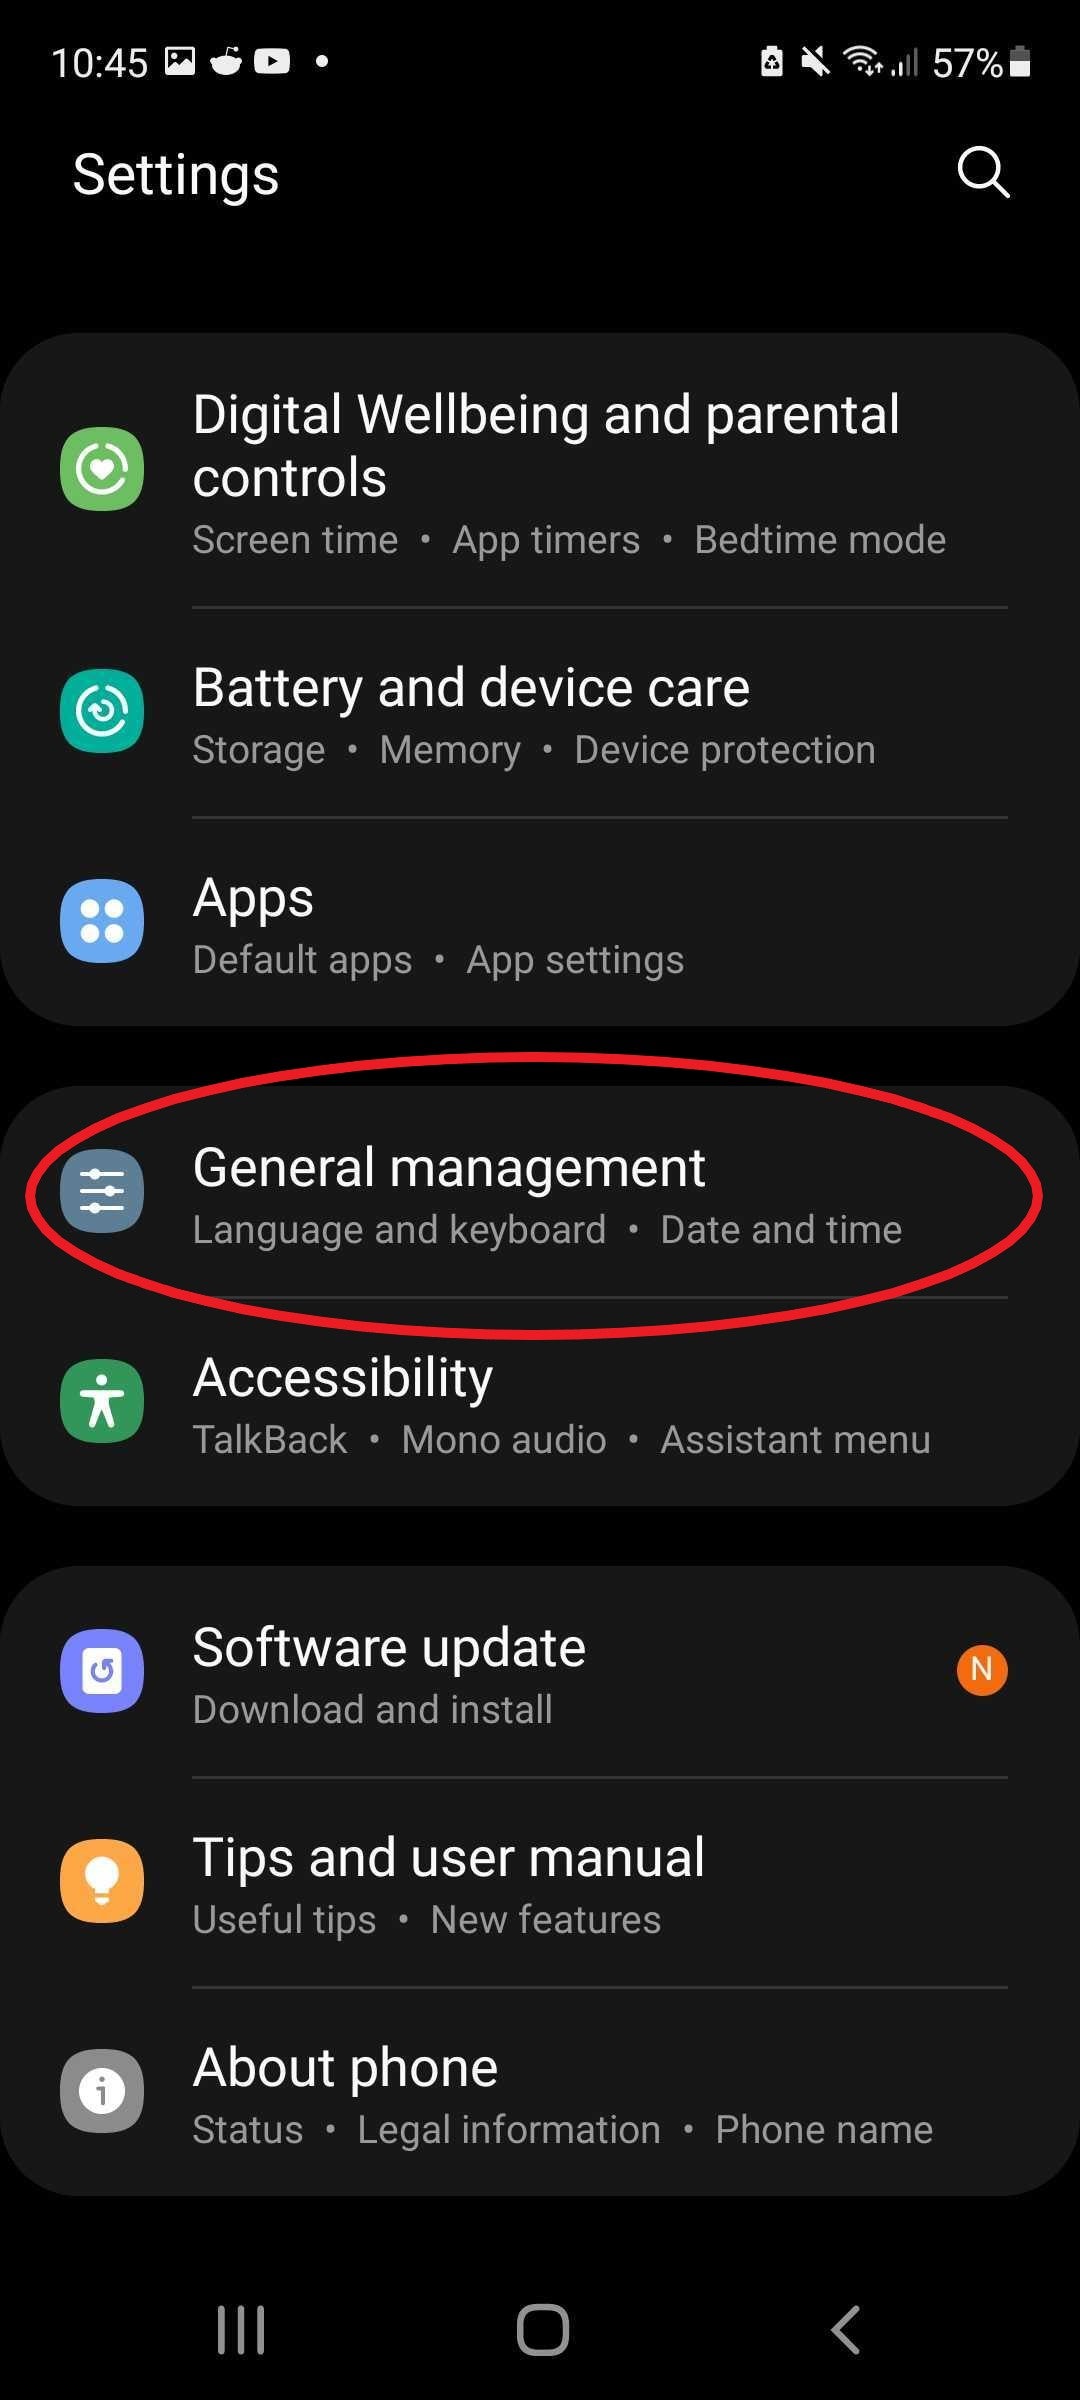 Samsung general management settings